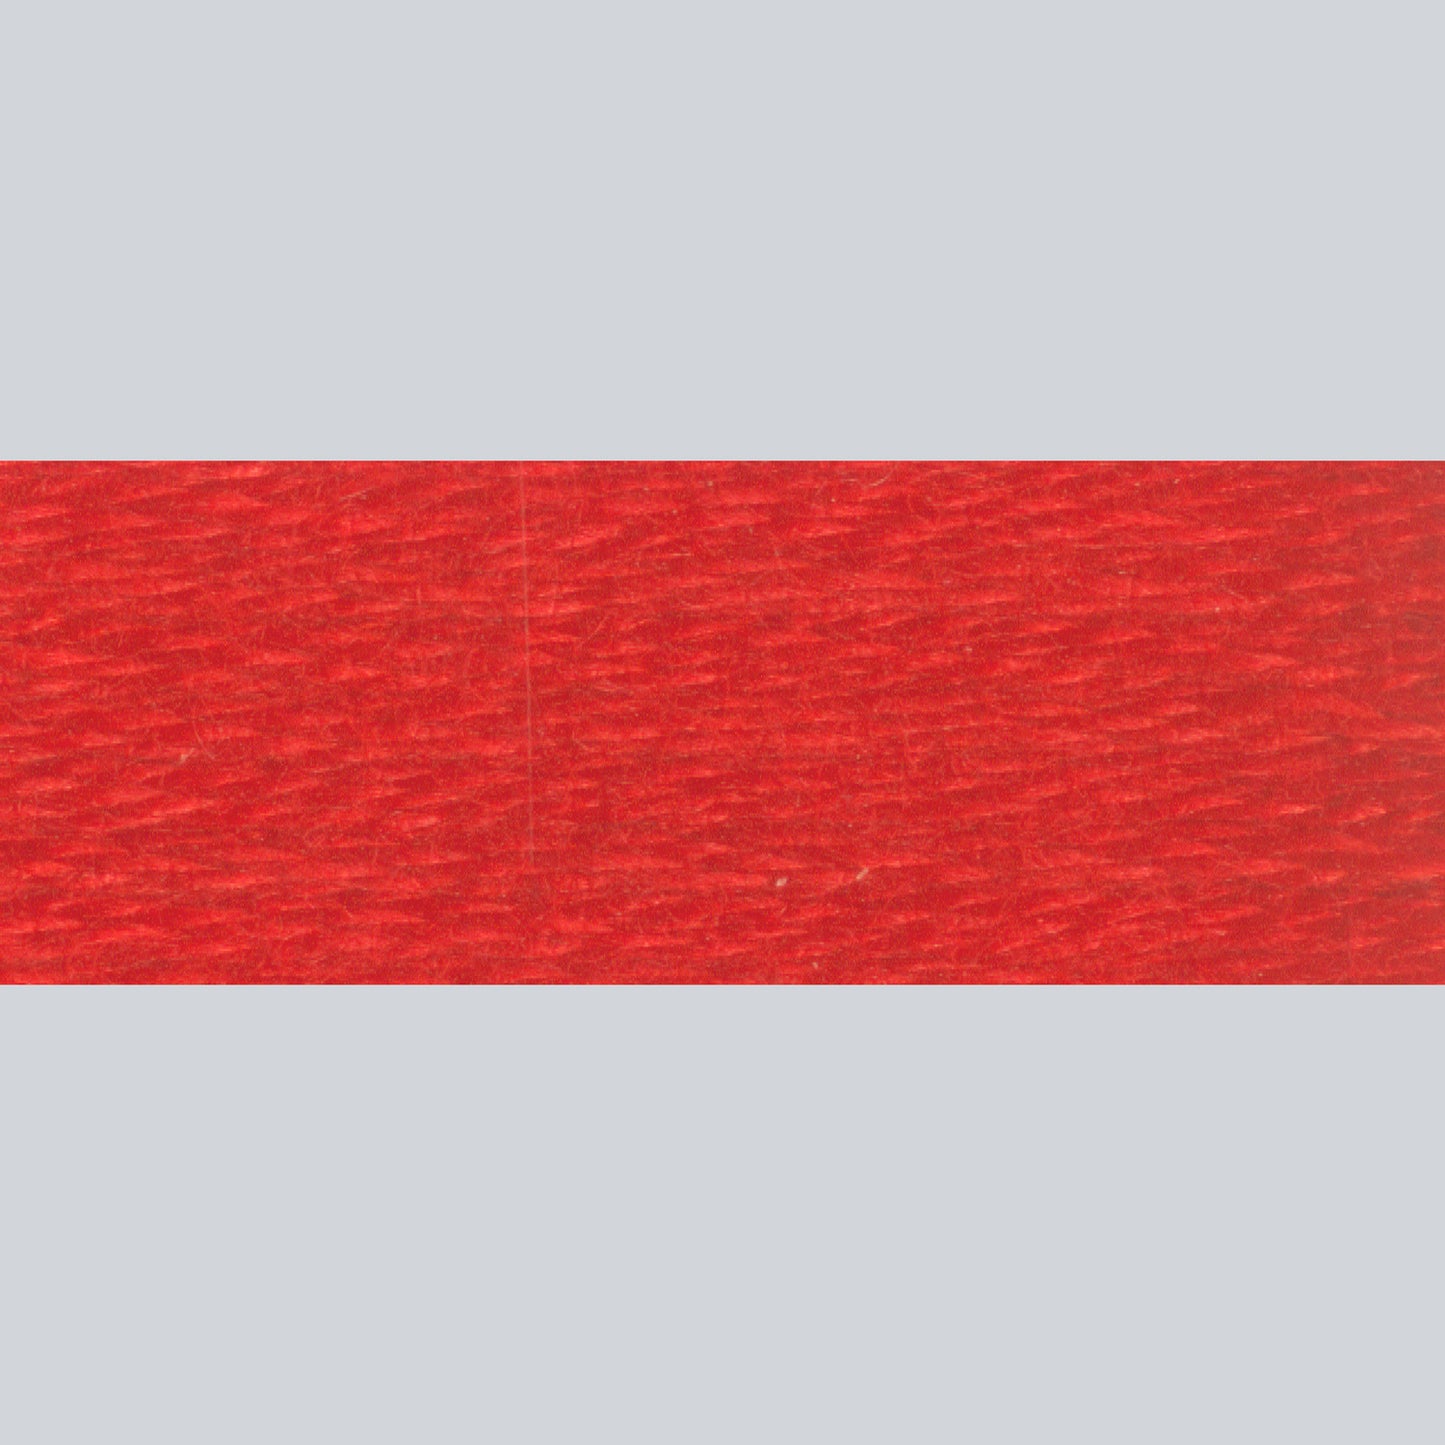 DMC Embroidery Floss - 666 Bright Red Alternative View #1